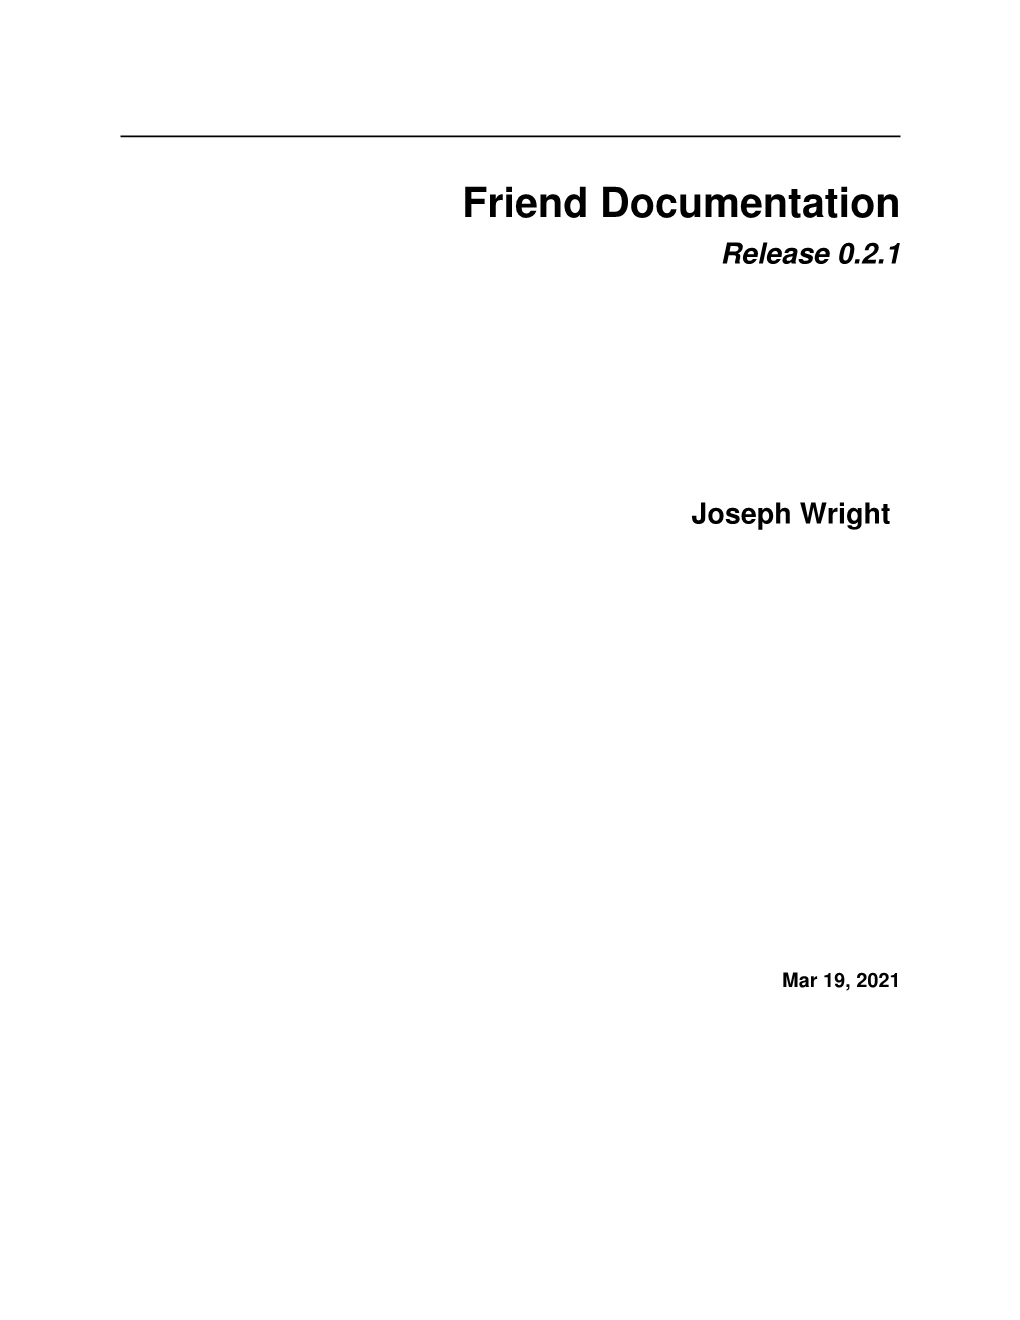 Friend Documentation Release 0.2.1